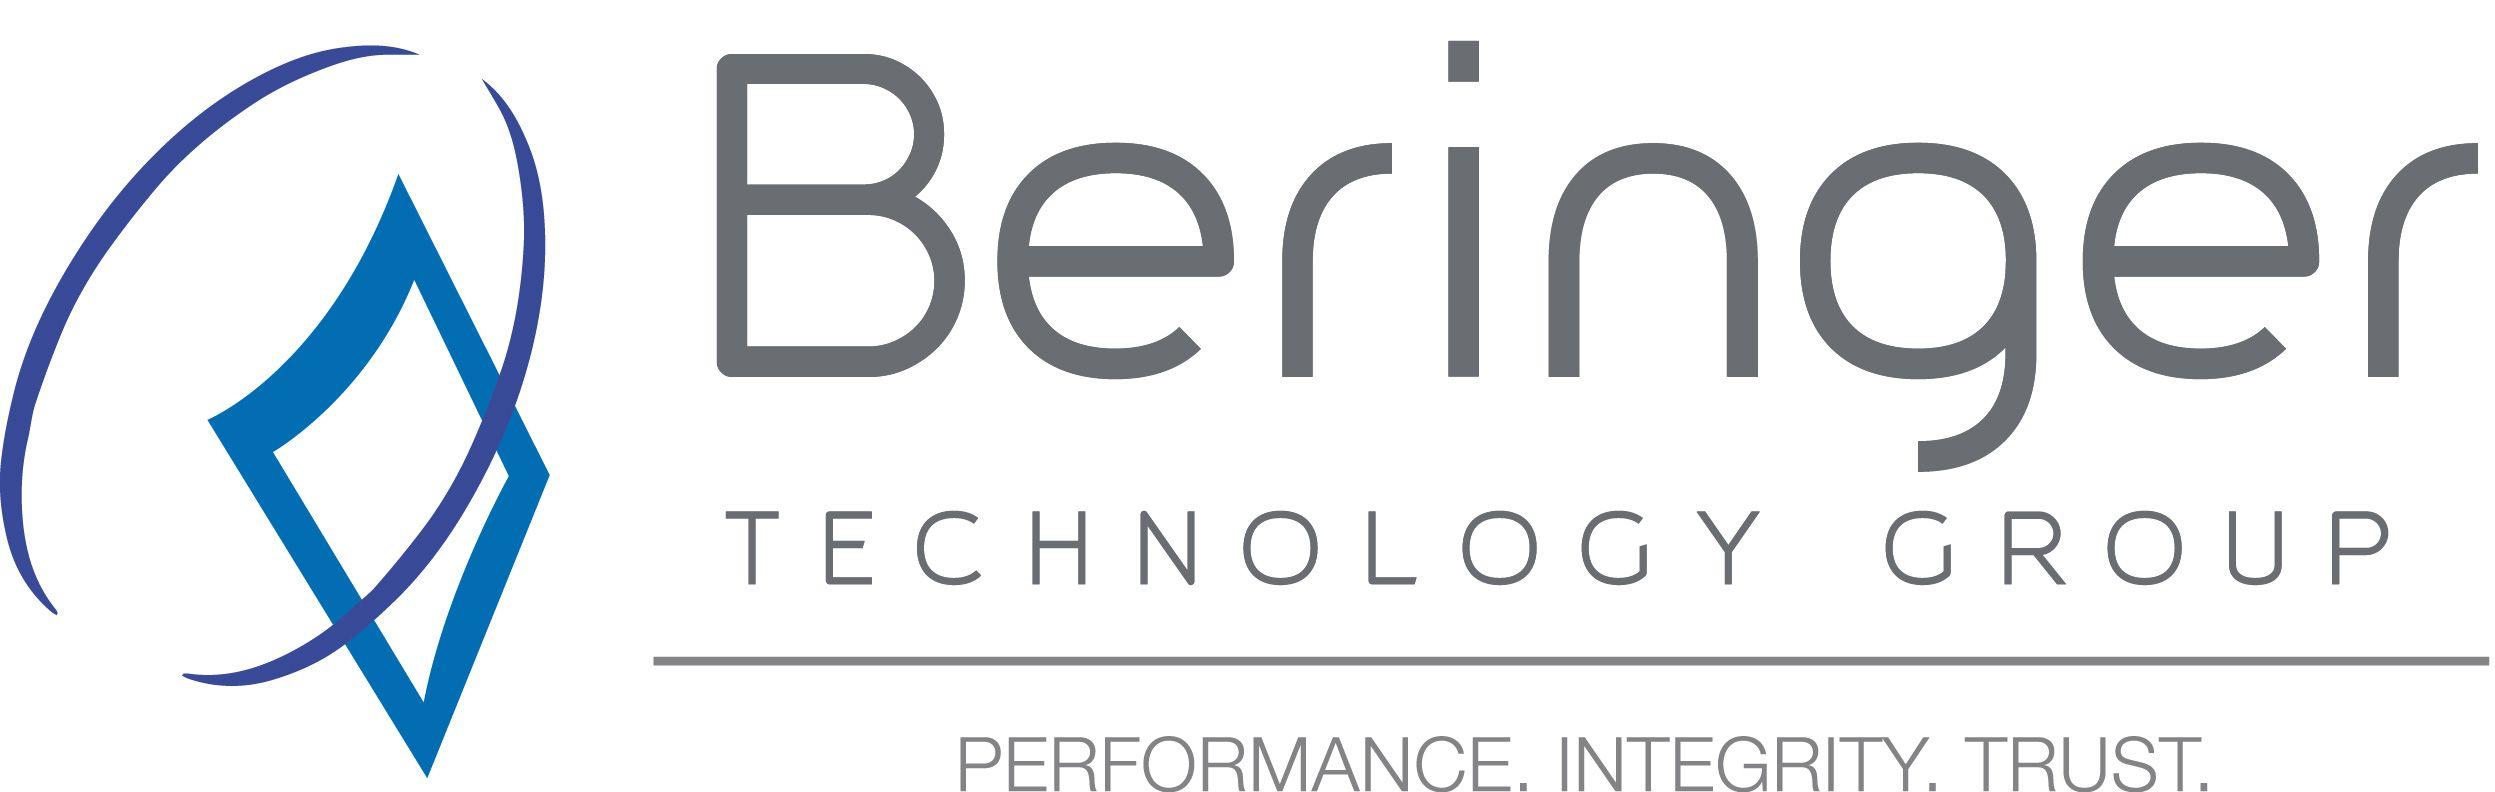 Beringer Logo - Beringer Technology Group Ranked #224 Among Top 501 Global Managed ...